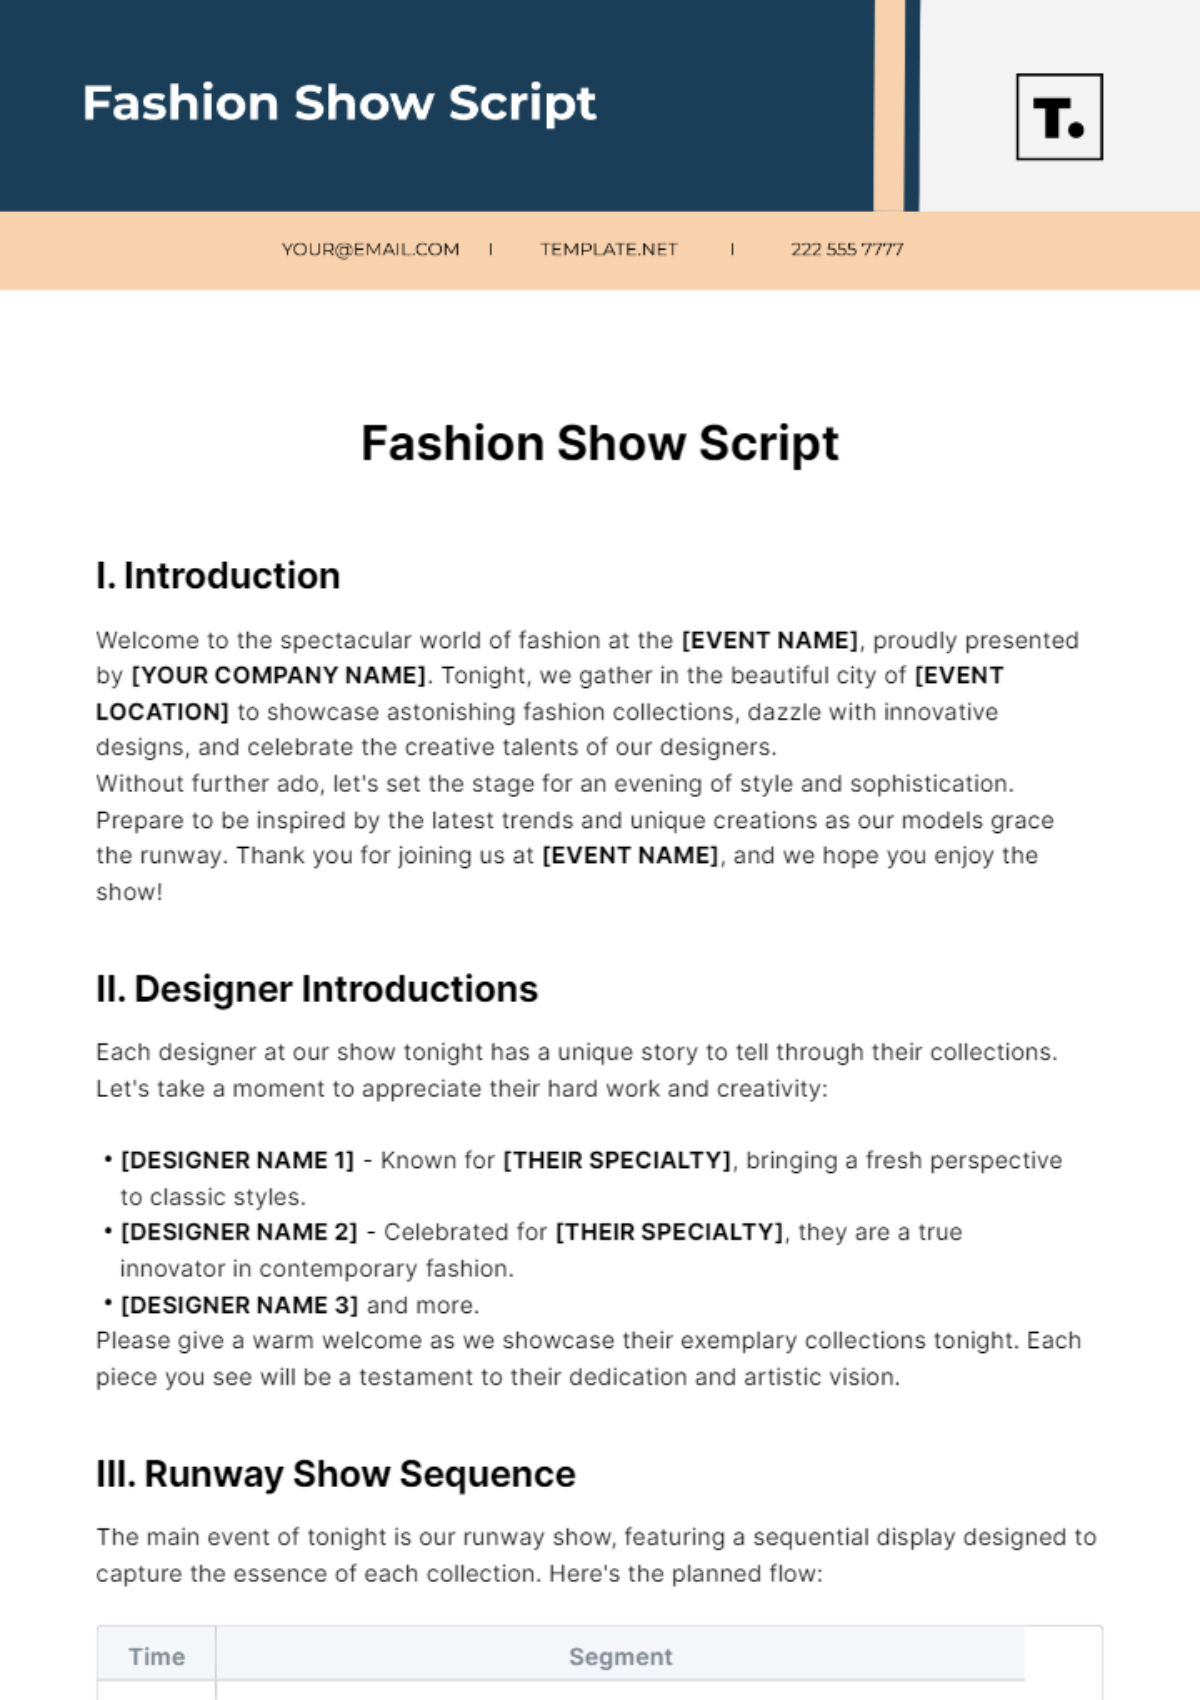 Fashion Show Script Template